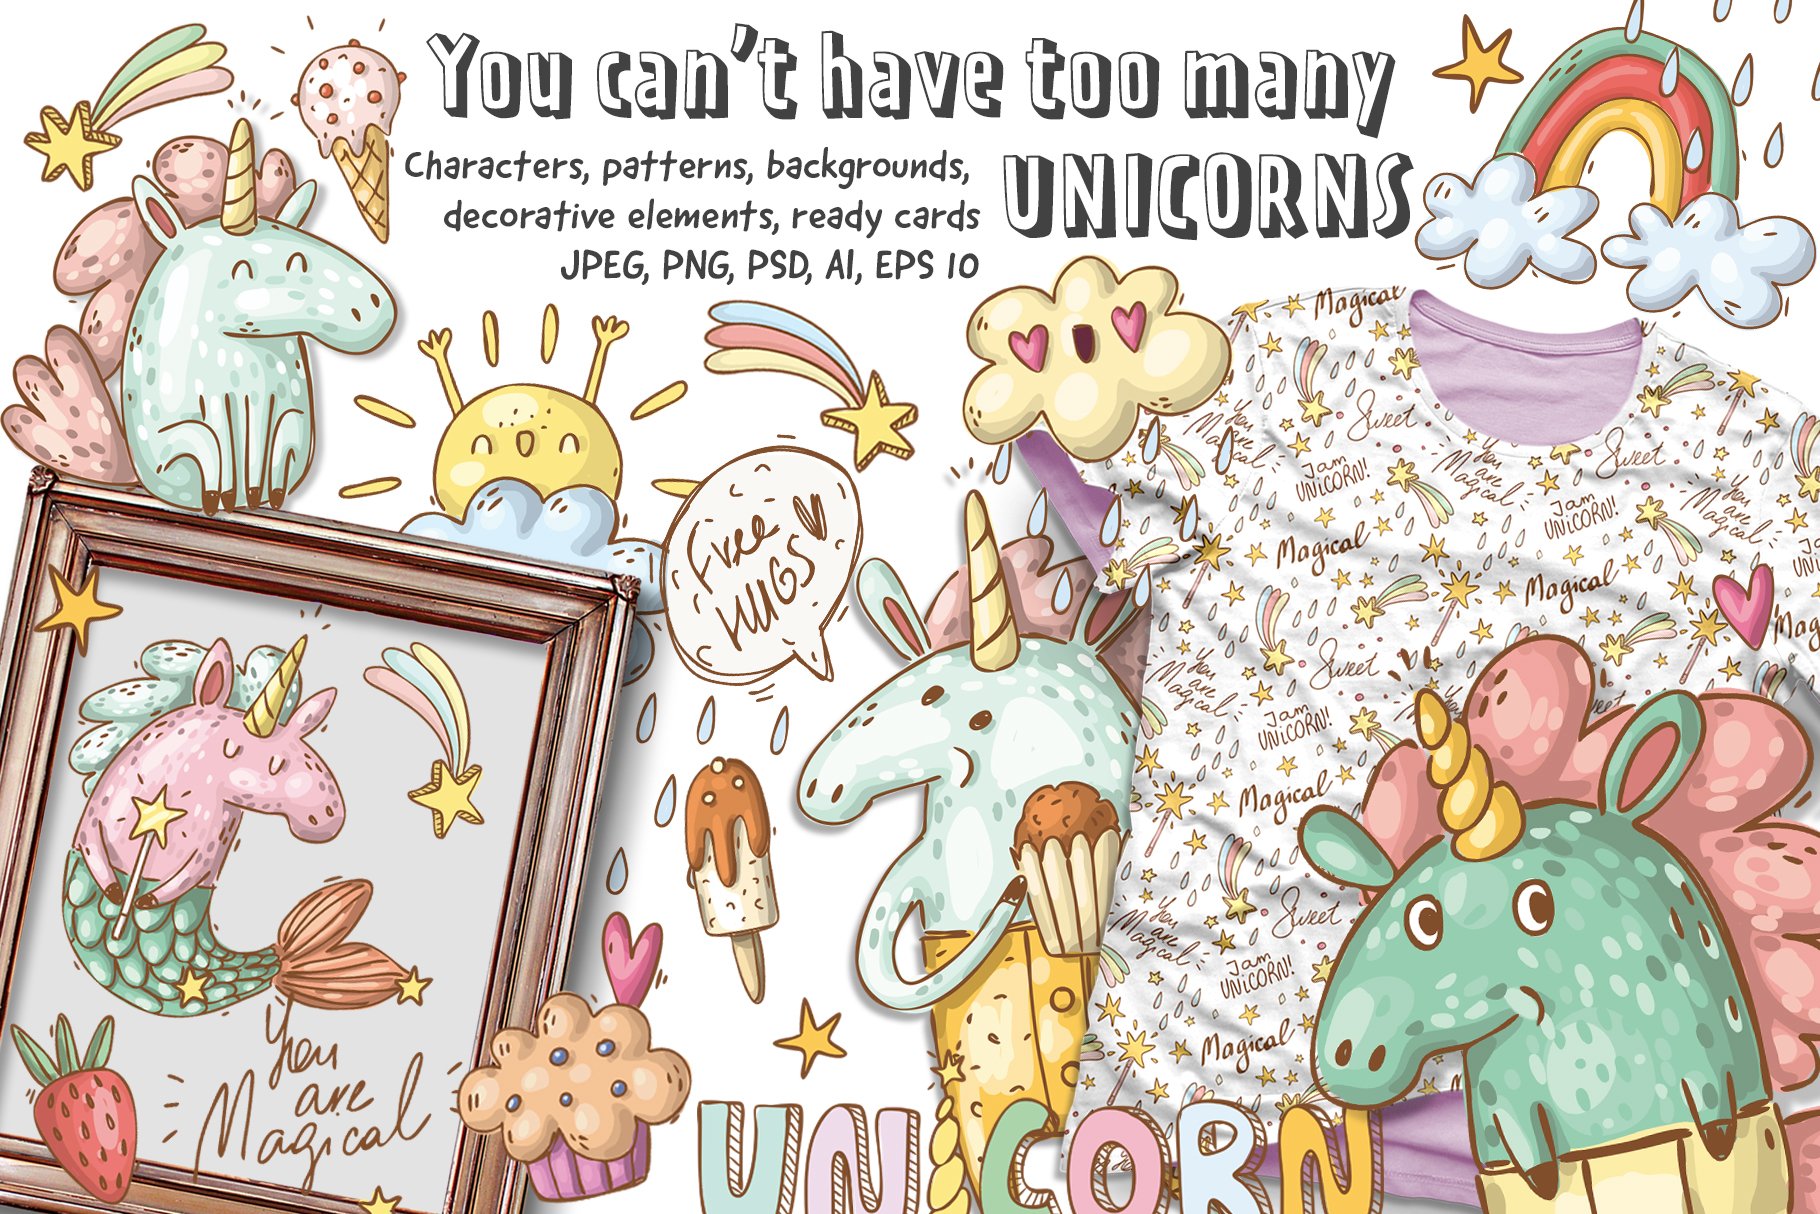 Unicorns and rainbows cover image.